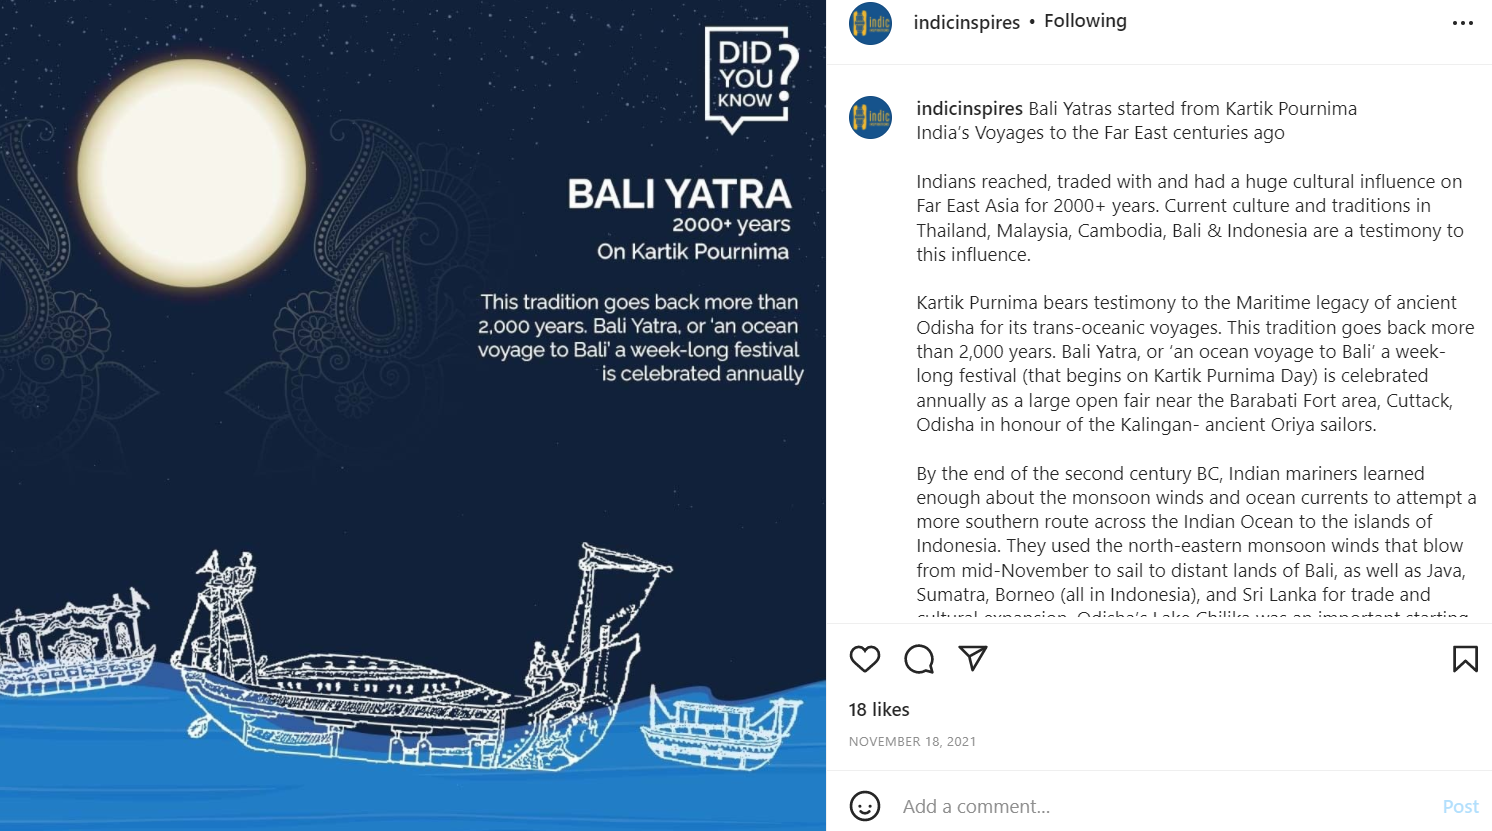 Instagram post on Bali Yatra